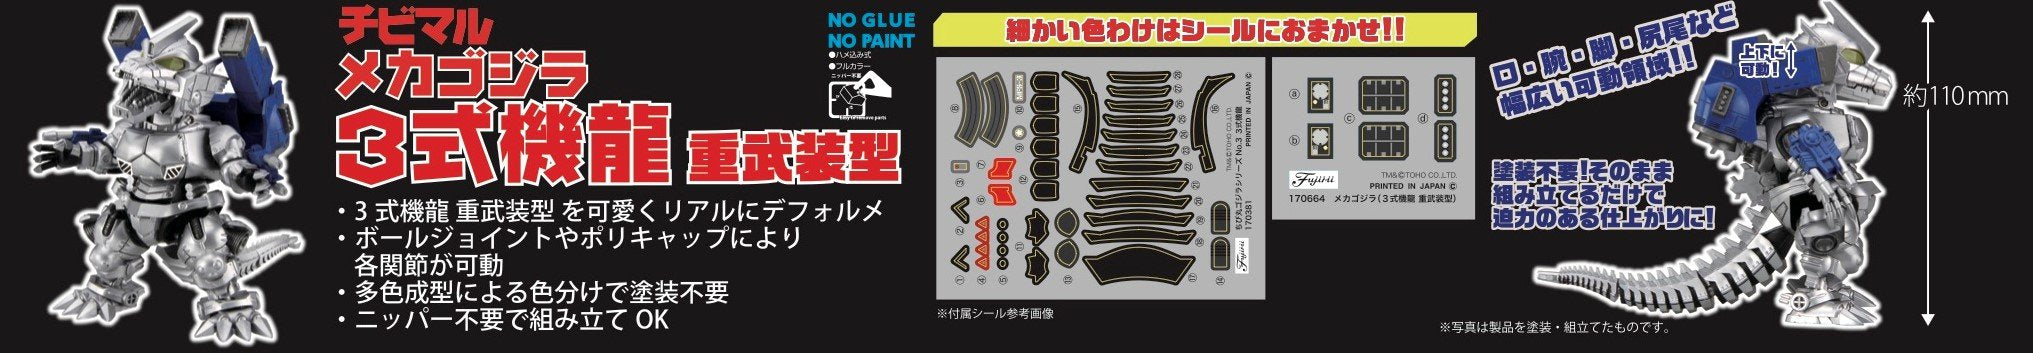 Fujimi Chibimaru Godzilla5 Mechagodzilla 3 Schwer bewaffneter japanischer Gundam-Bausatz